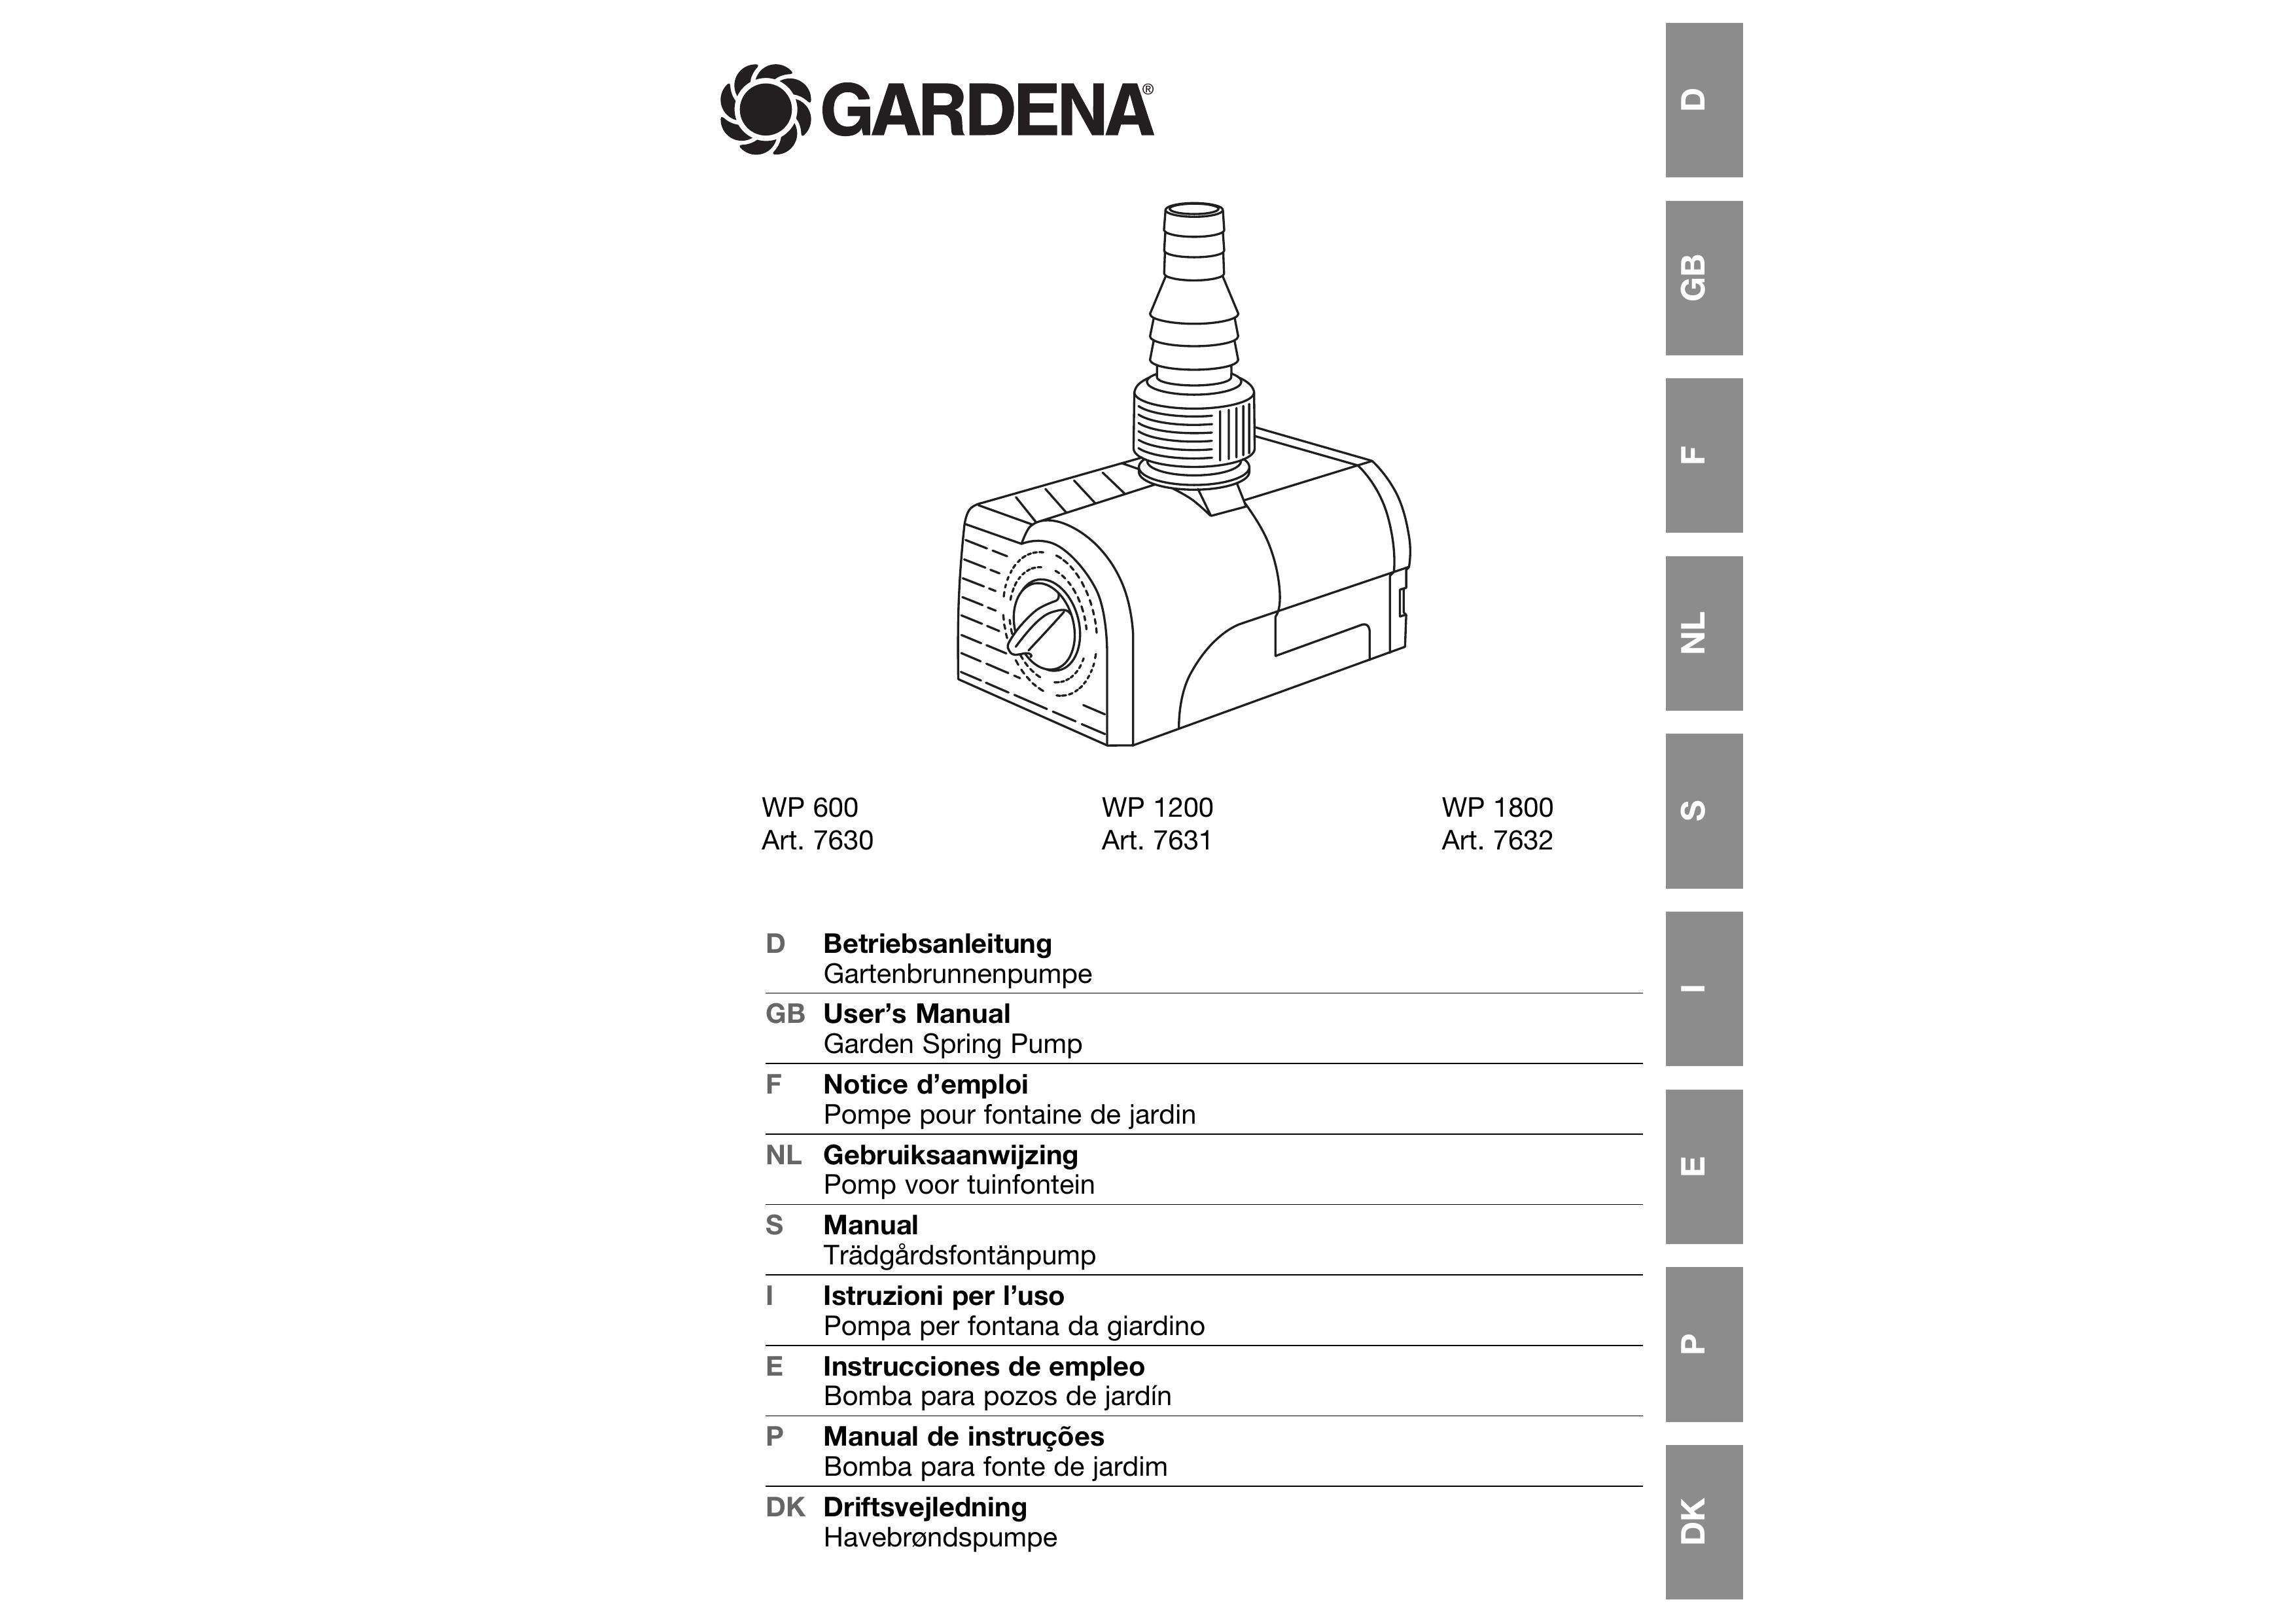 Gardena ART 7630 Sprinkler User Manual